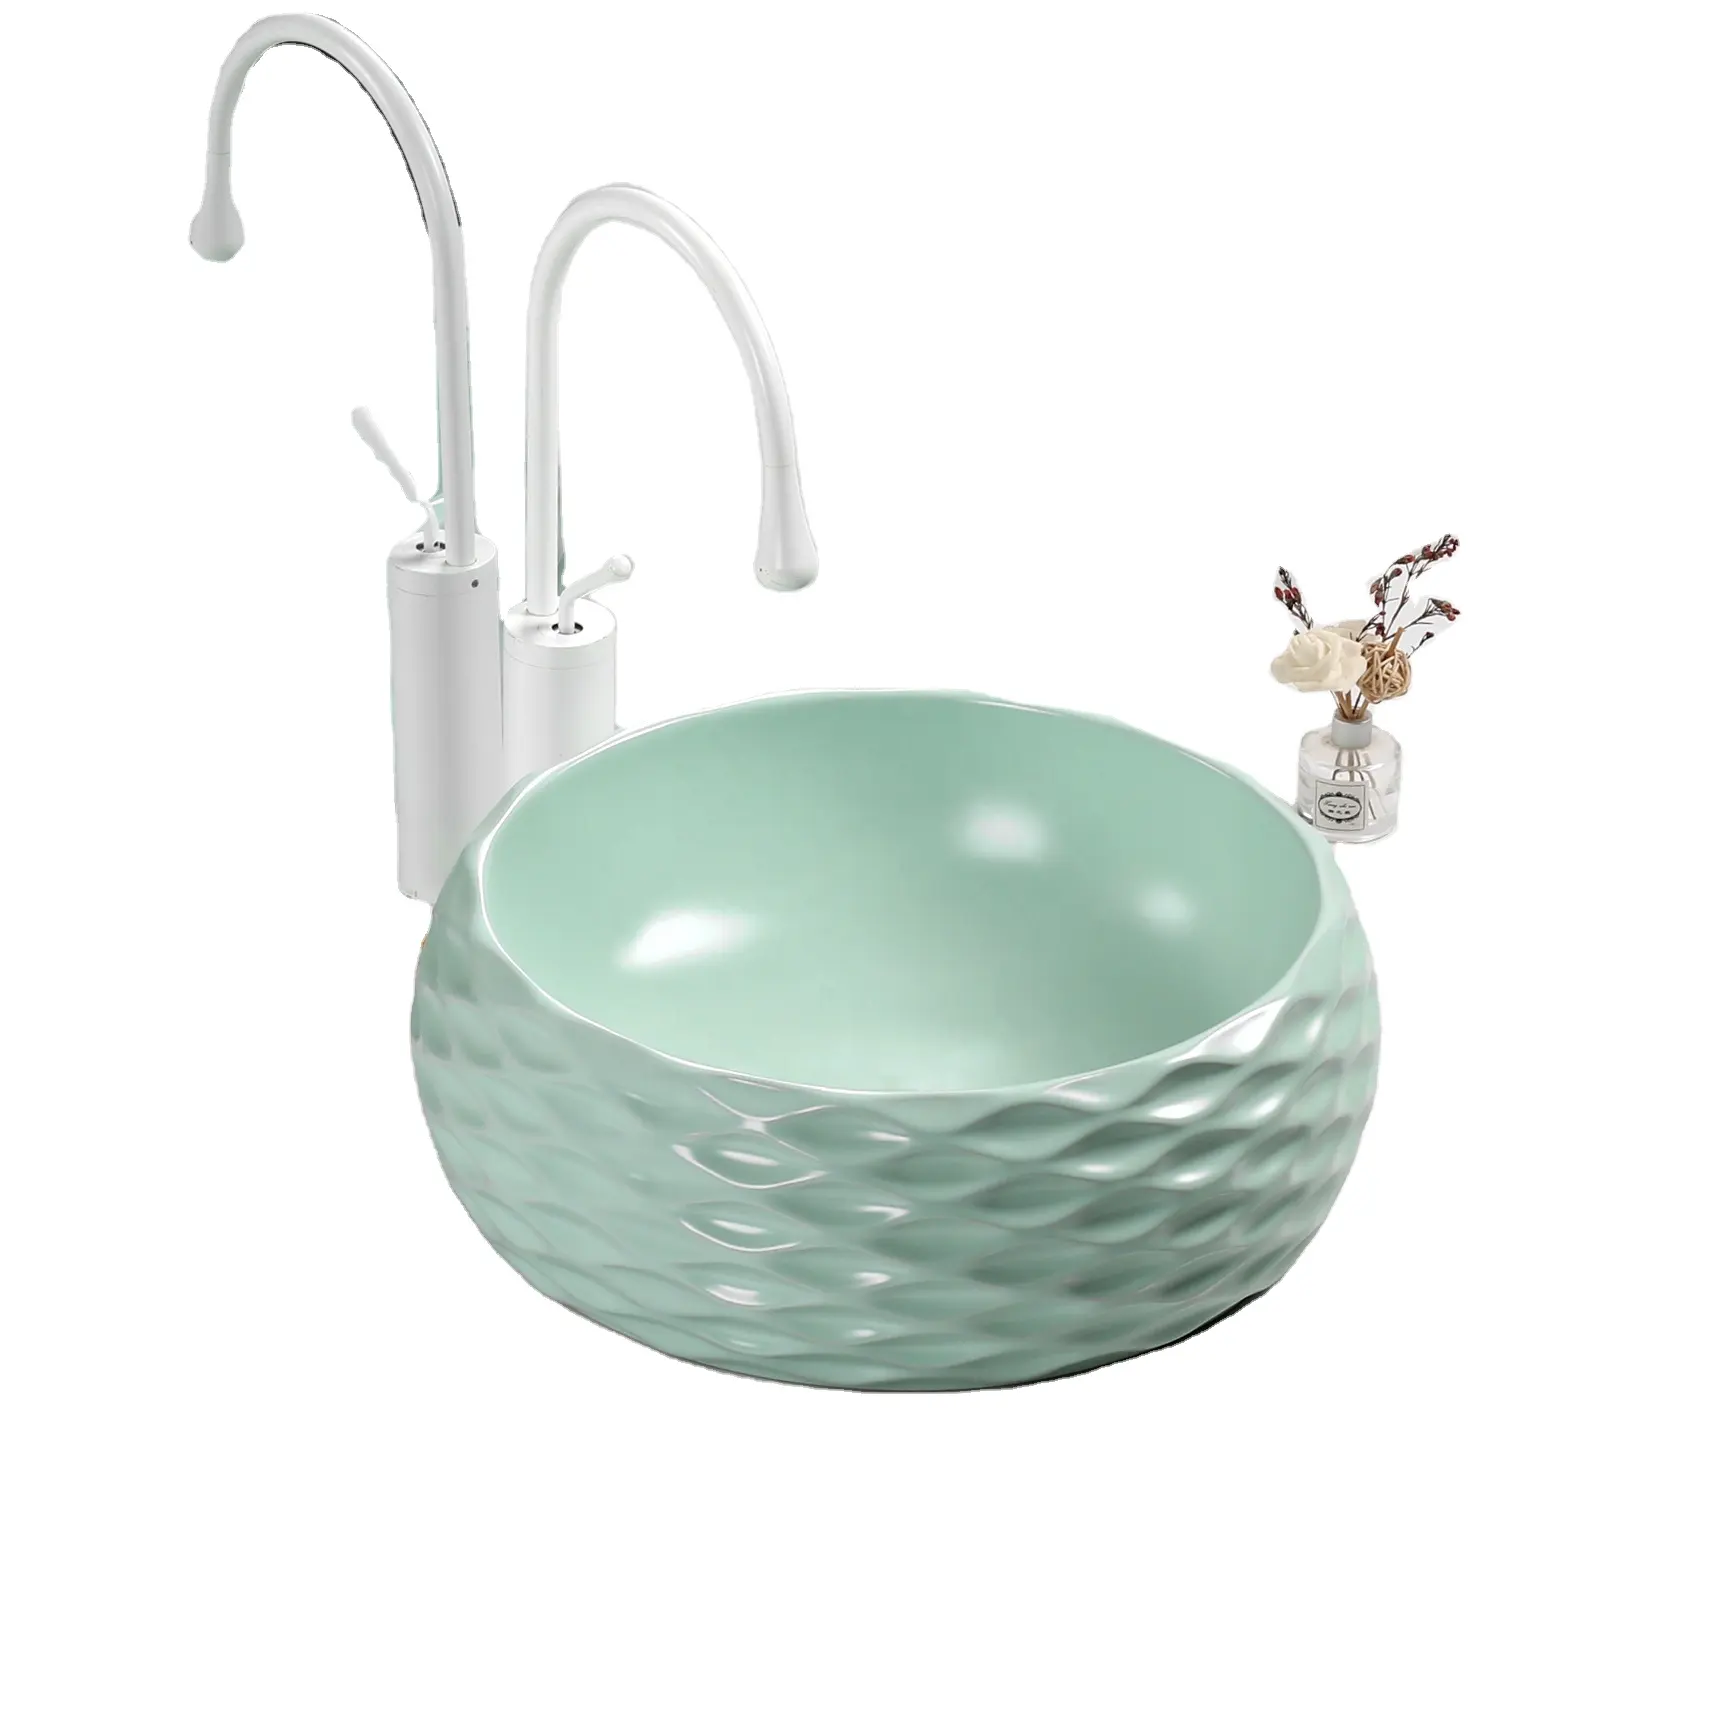 E-bell 8788-8/9 ручной работы матовая зеленая раковина круглой формы с дизайном для ванной комнаты